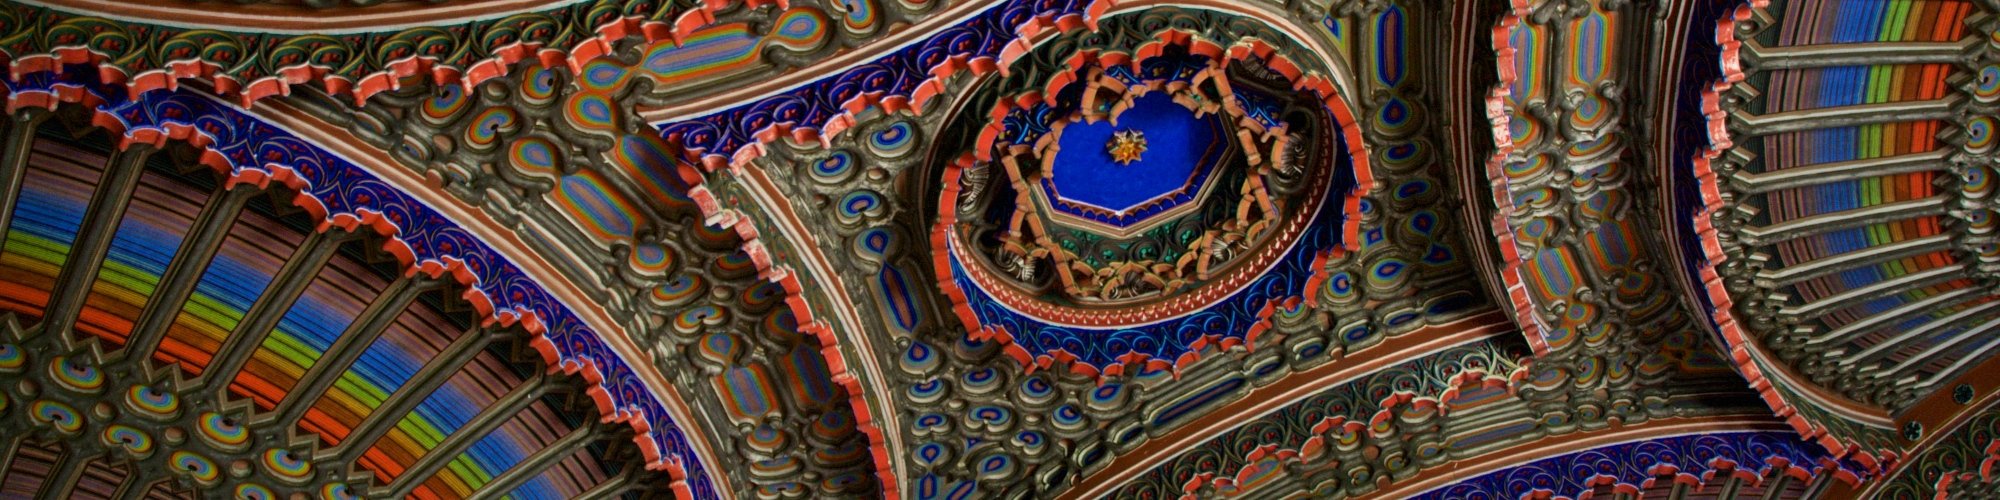 Espectaculares bóvedas del Castillo de Sammezzano